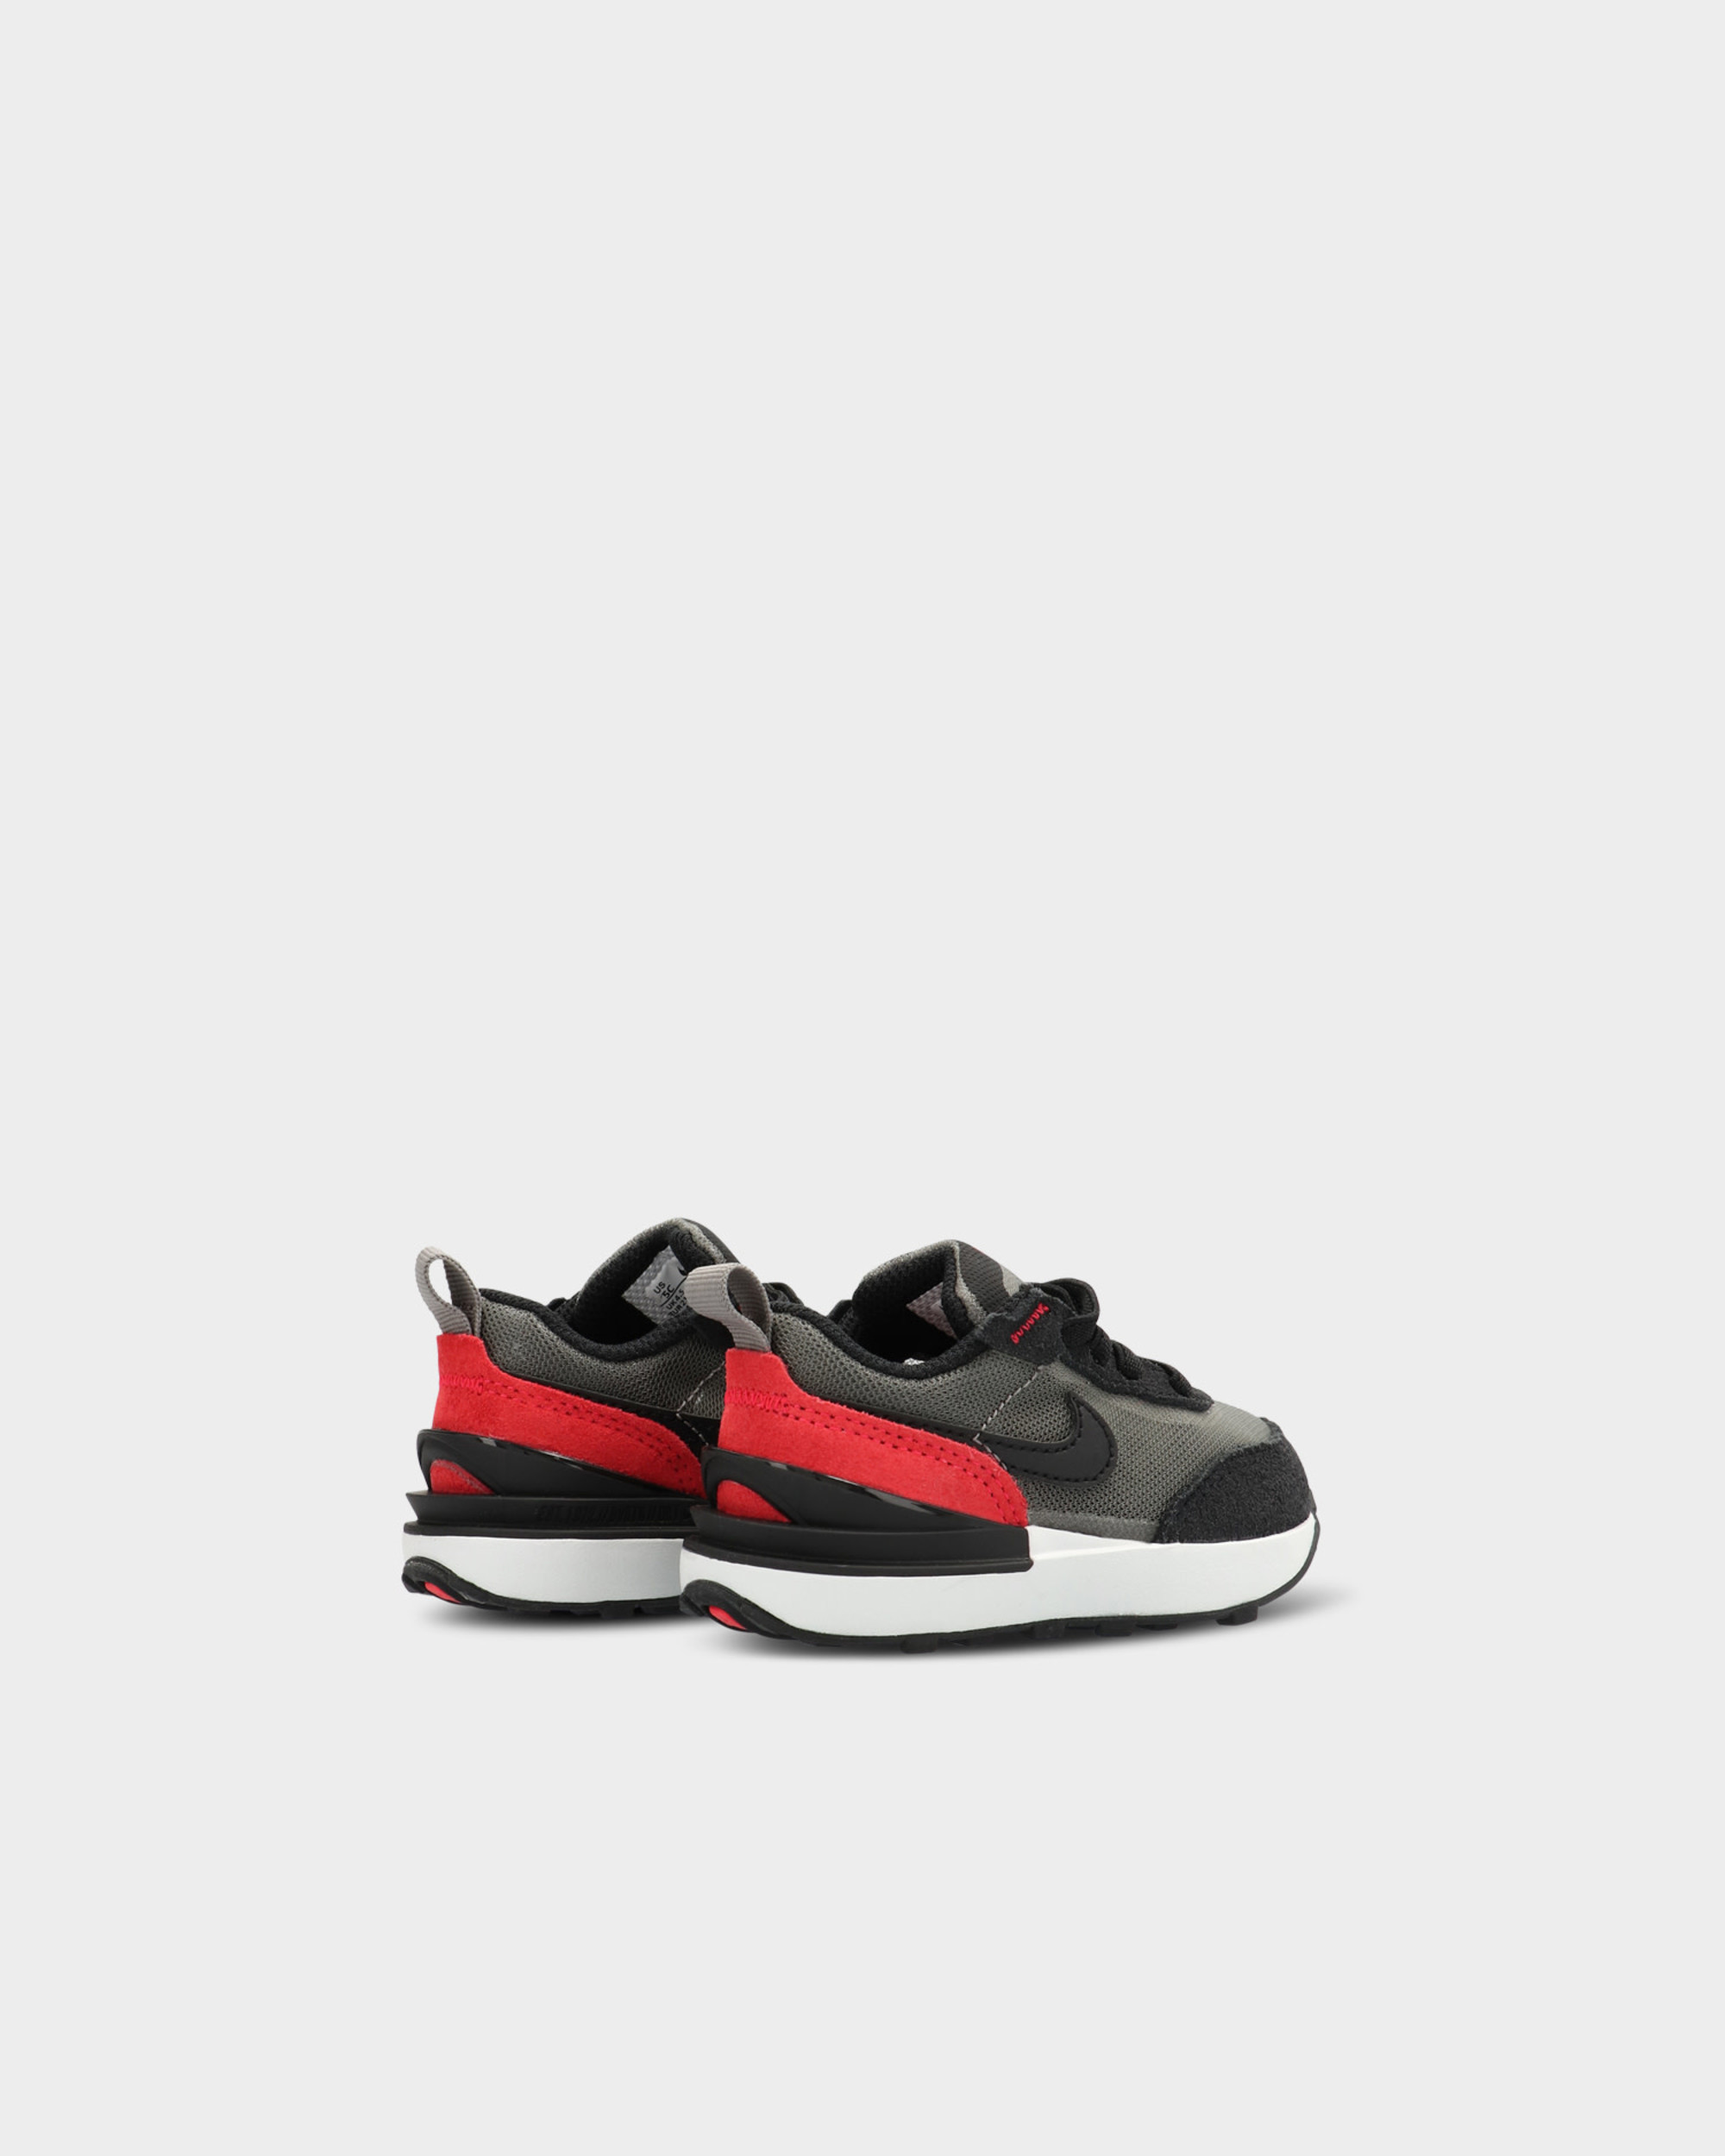 Nike Waffle One Baby & Toddler Shoe Flat Pewter/Black-Sired Red- Photon Dust